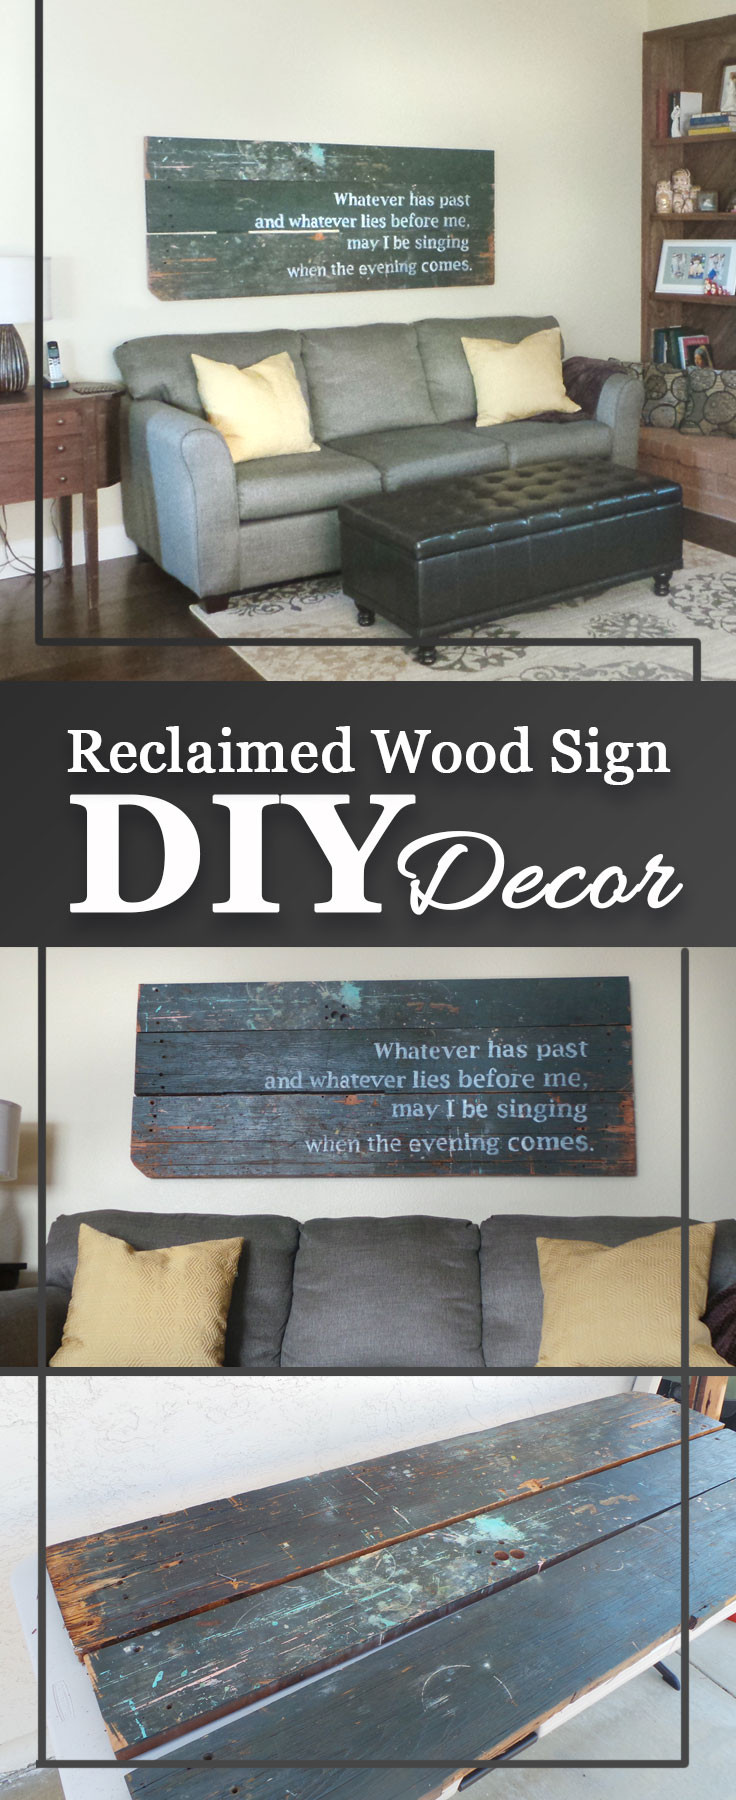 Reclaimed Wood Signs DIY
 Reclaimed wood sign DIY Decor